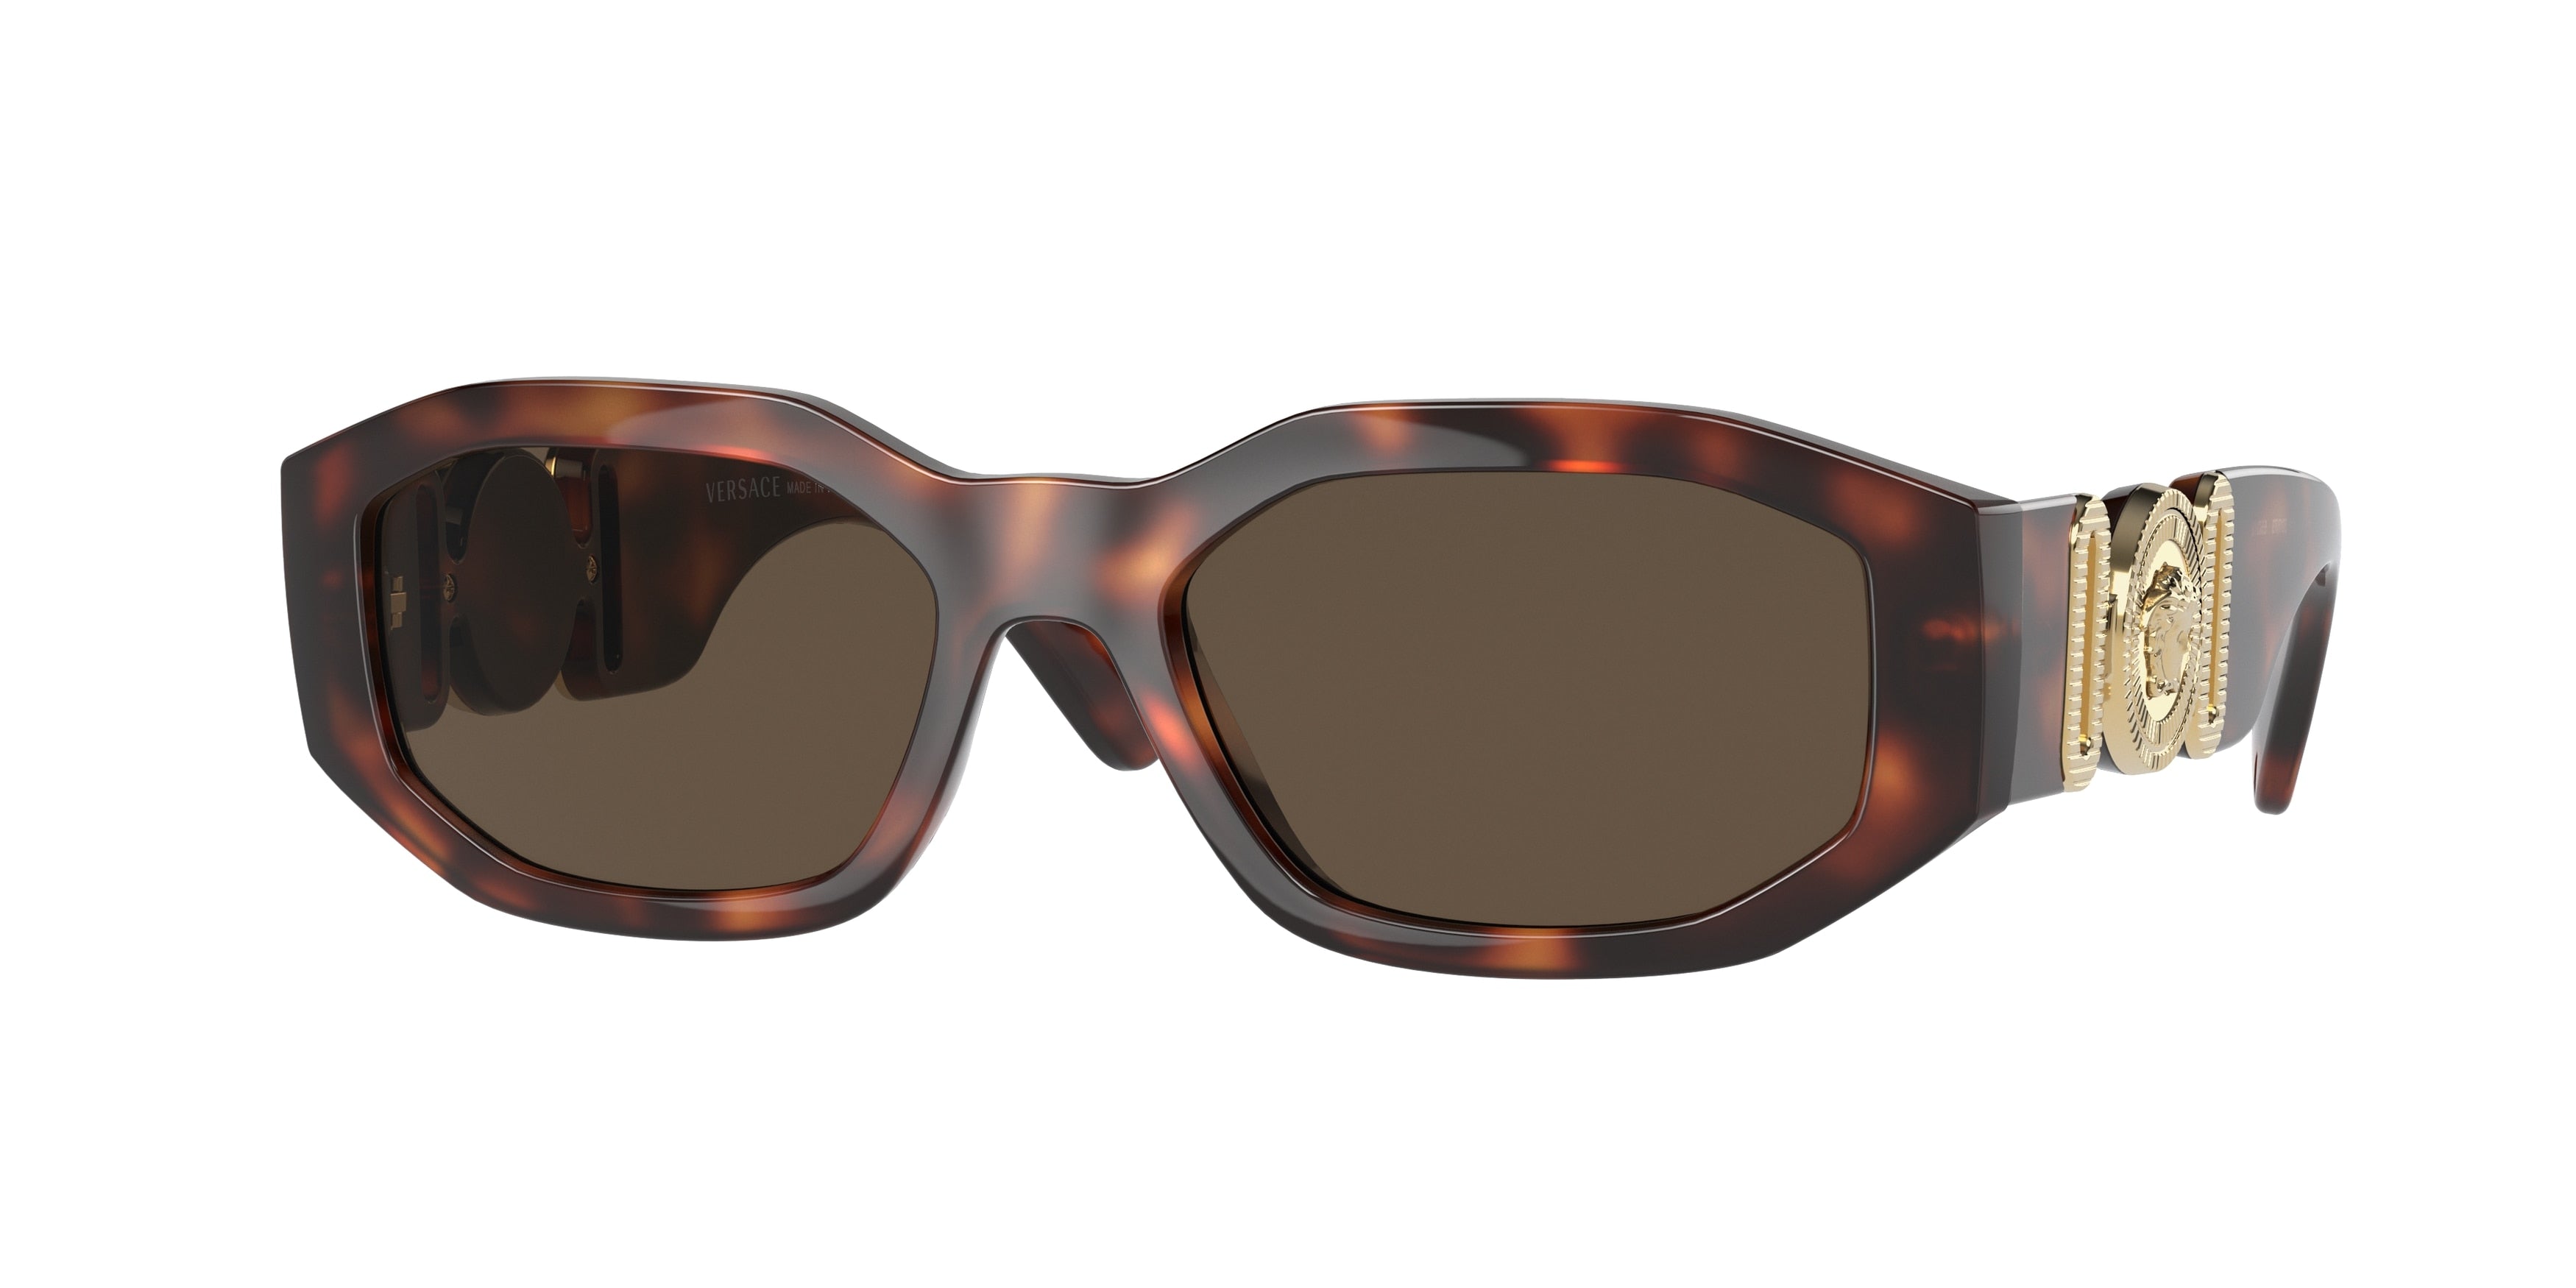 Versace VE4361F Irregular Sunglasses  521773-Havana 55-140-18 - Color Map Tortoise